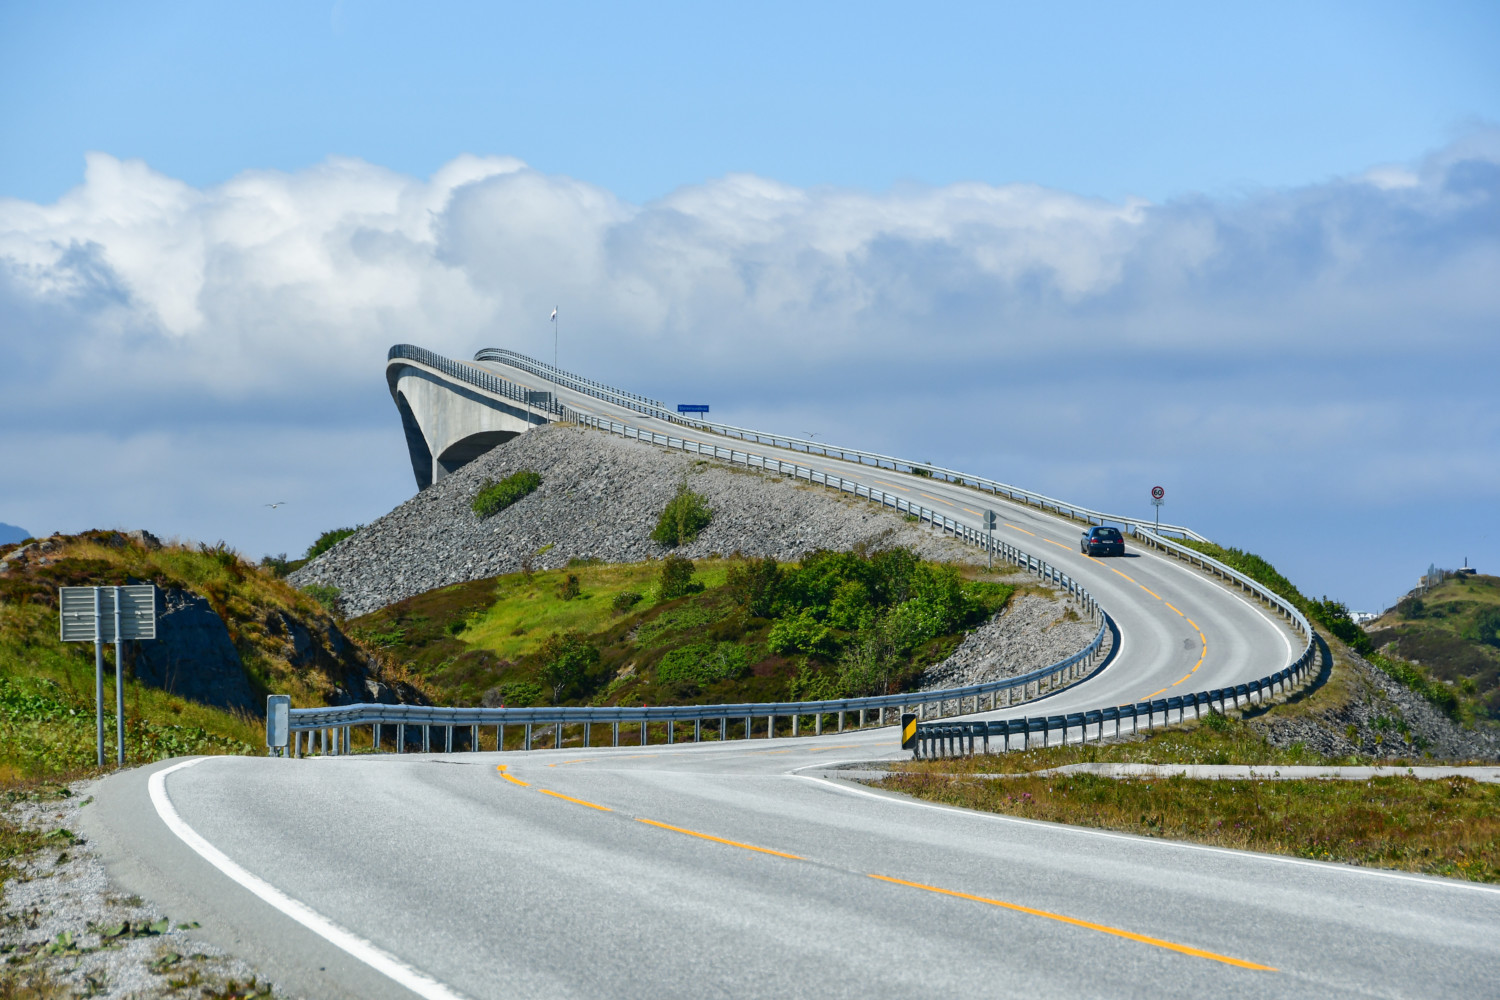 Storeisundbrua Atlantic Ocean Road, Norway